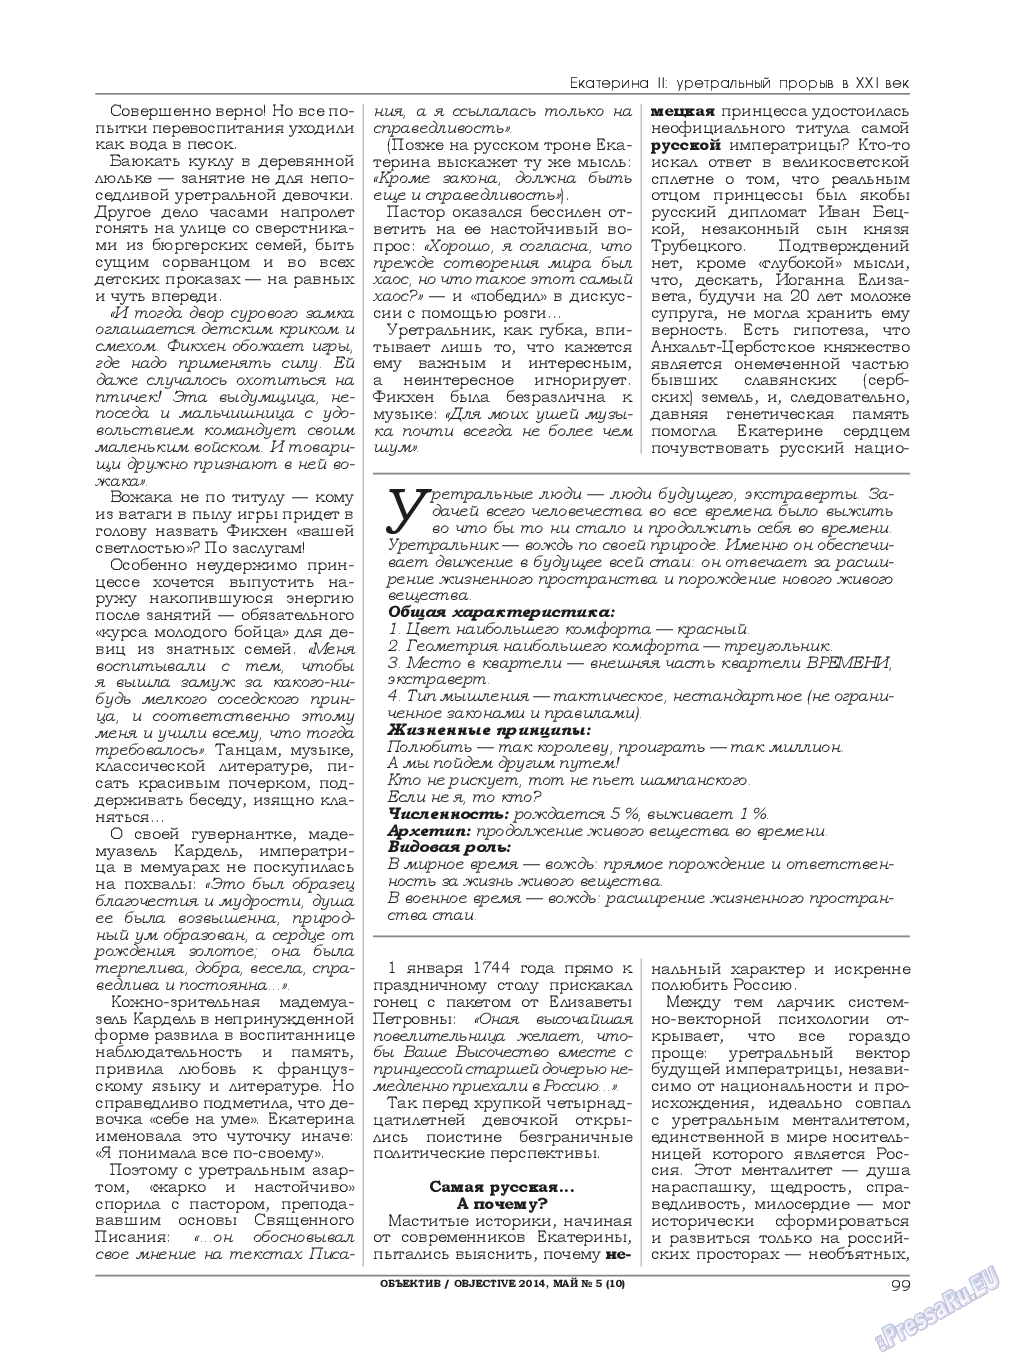 Объектив EU, журнал. 2014 №5 стр.99